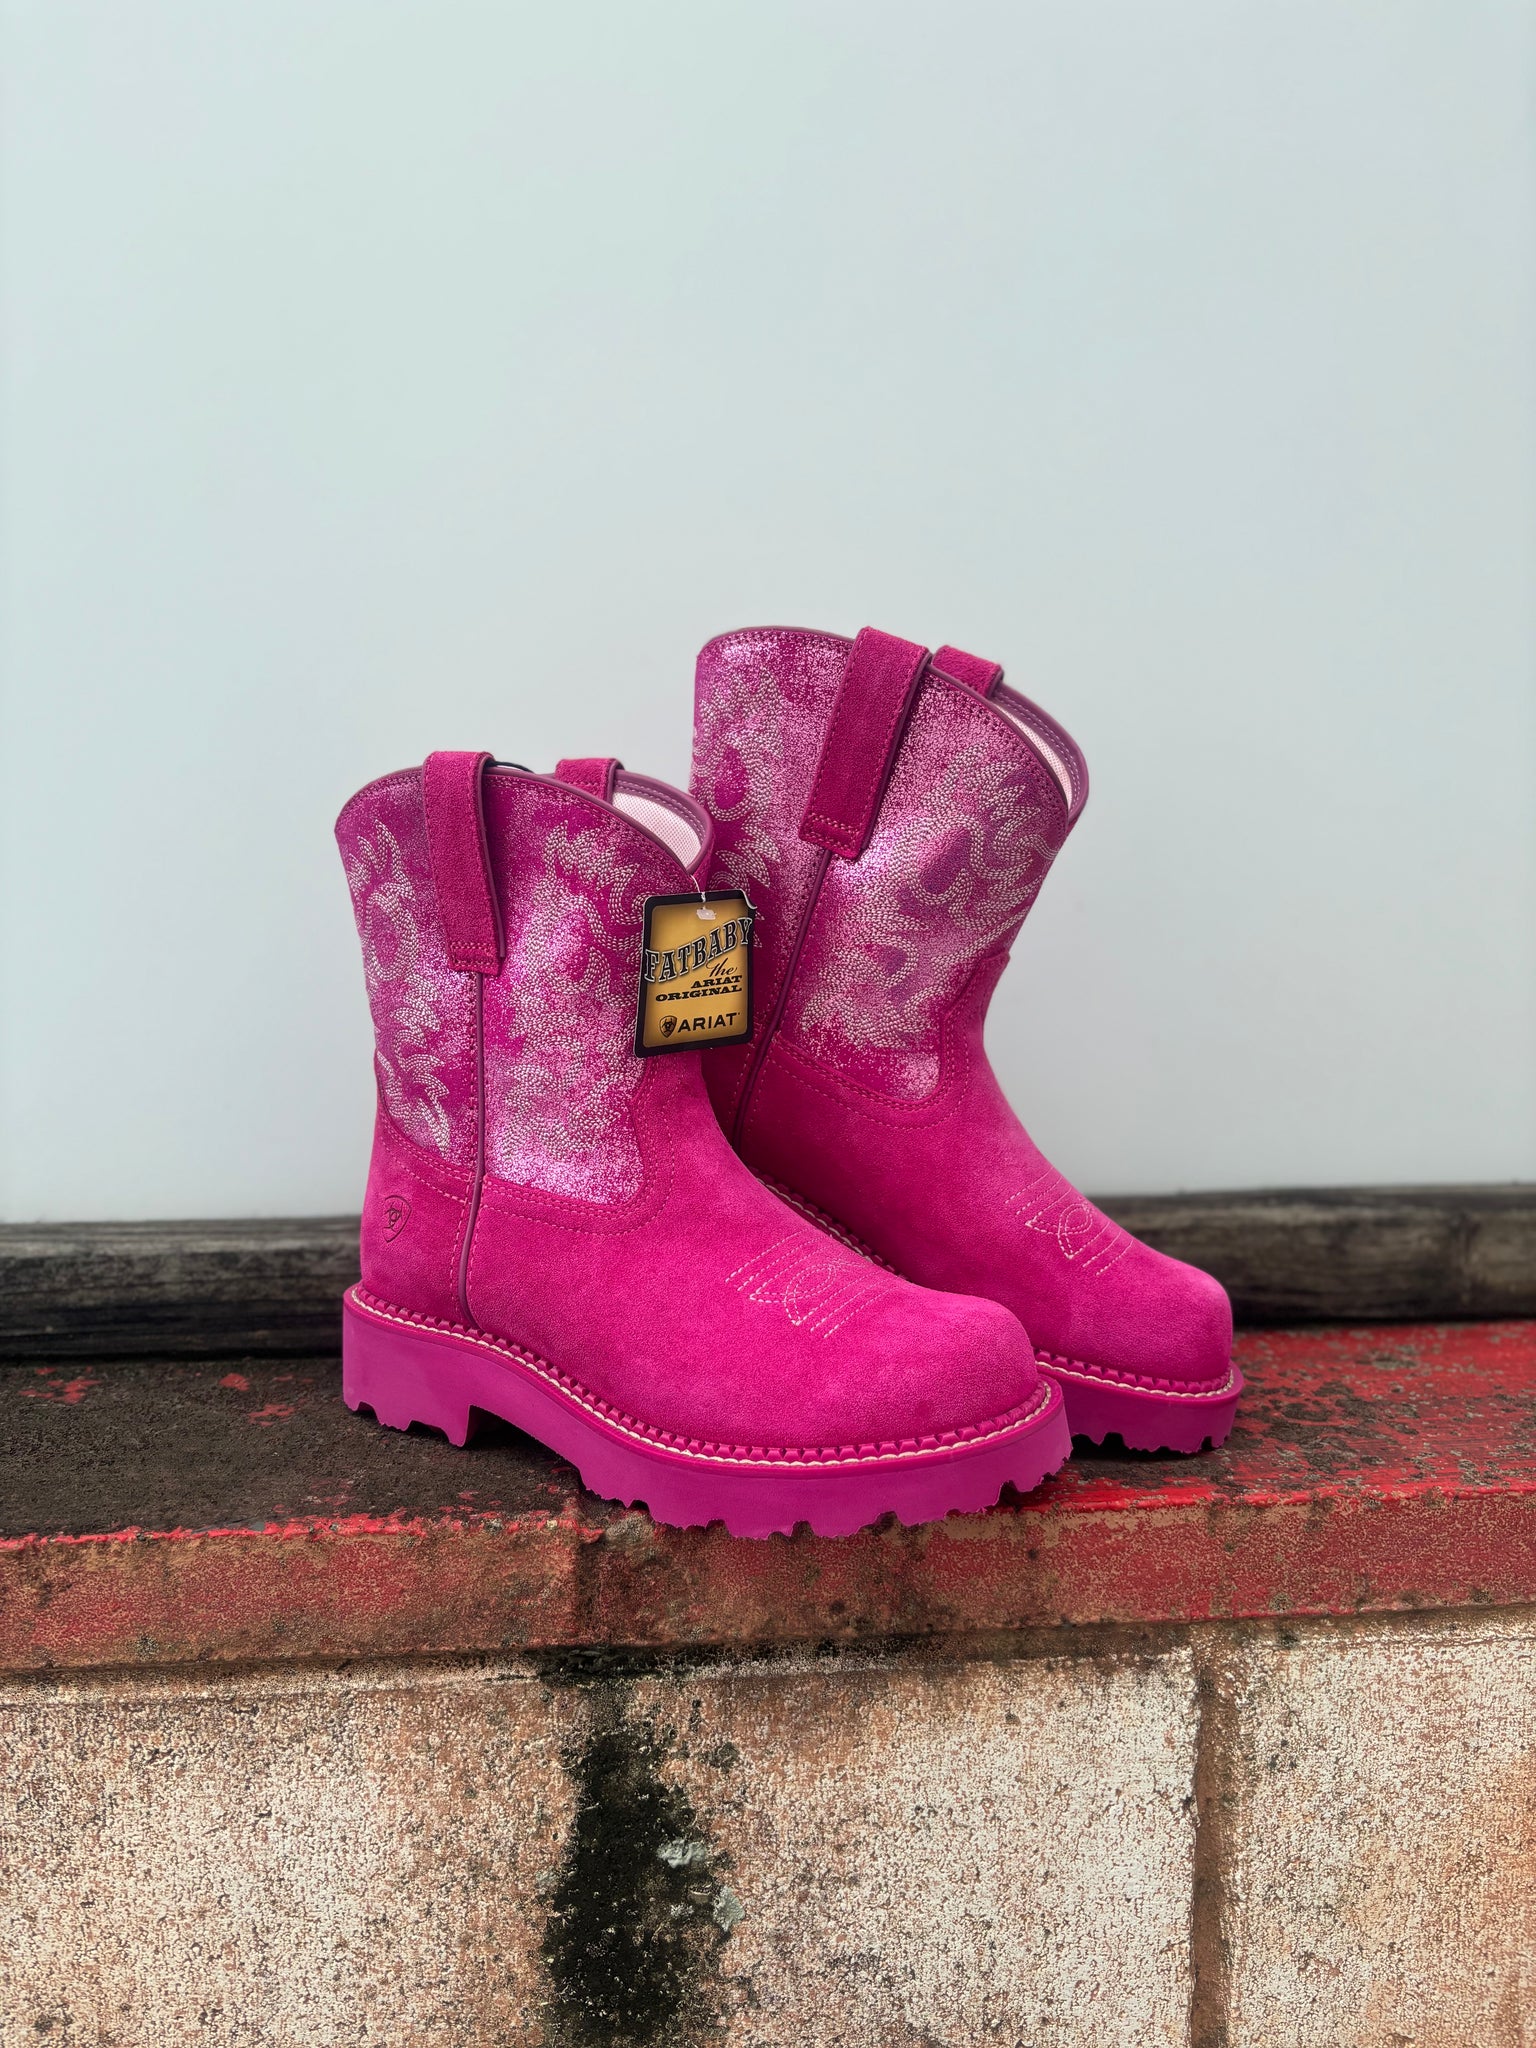 10050997 Ariat Ladies Fatbaby Boots Hottest Pink/Pink Metallic